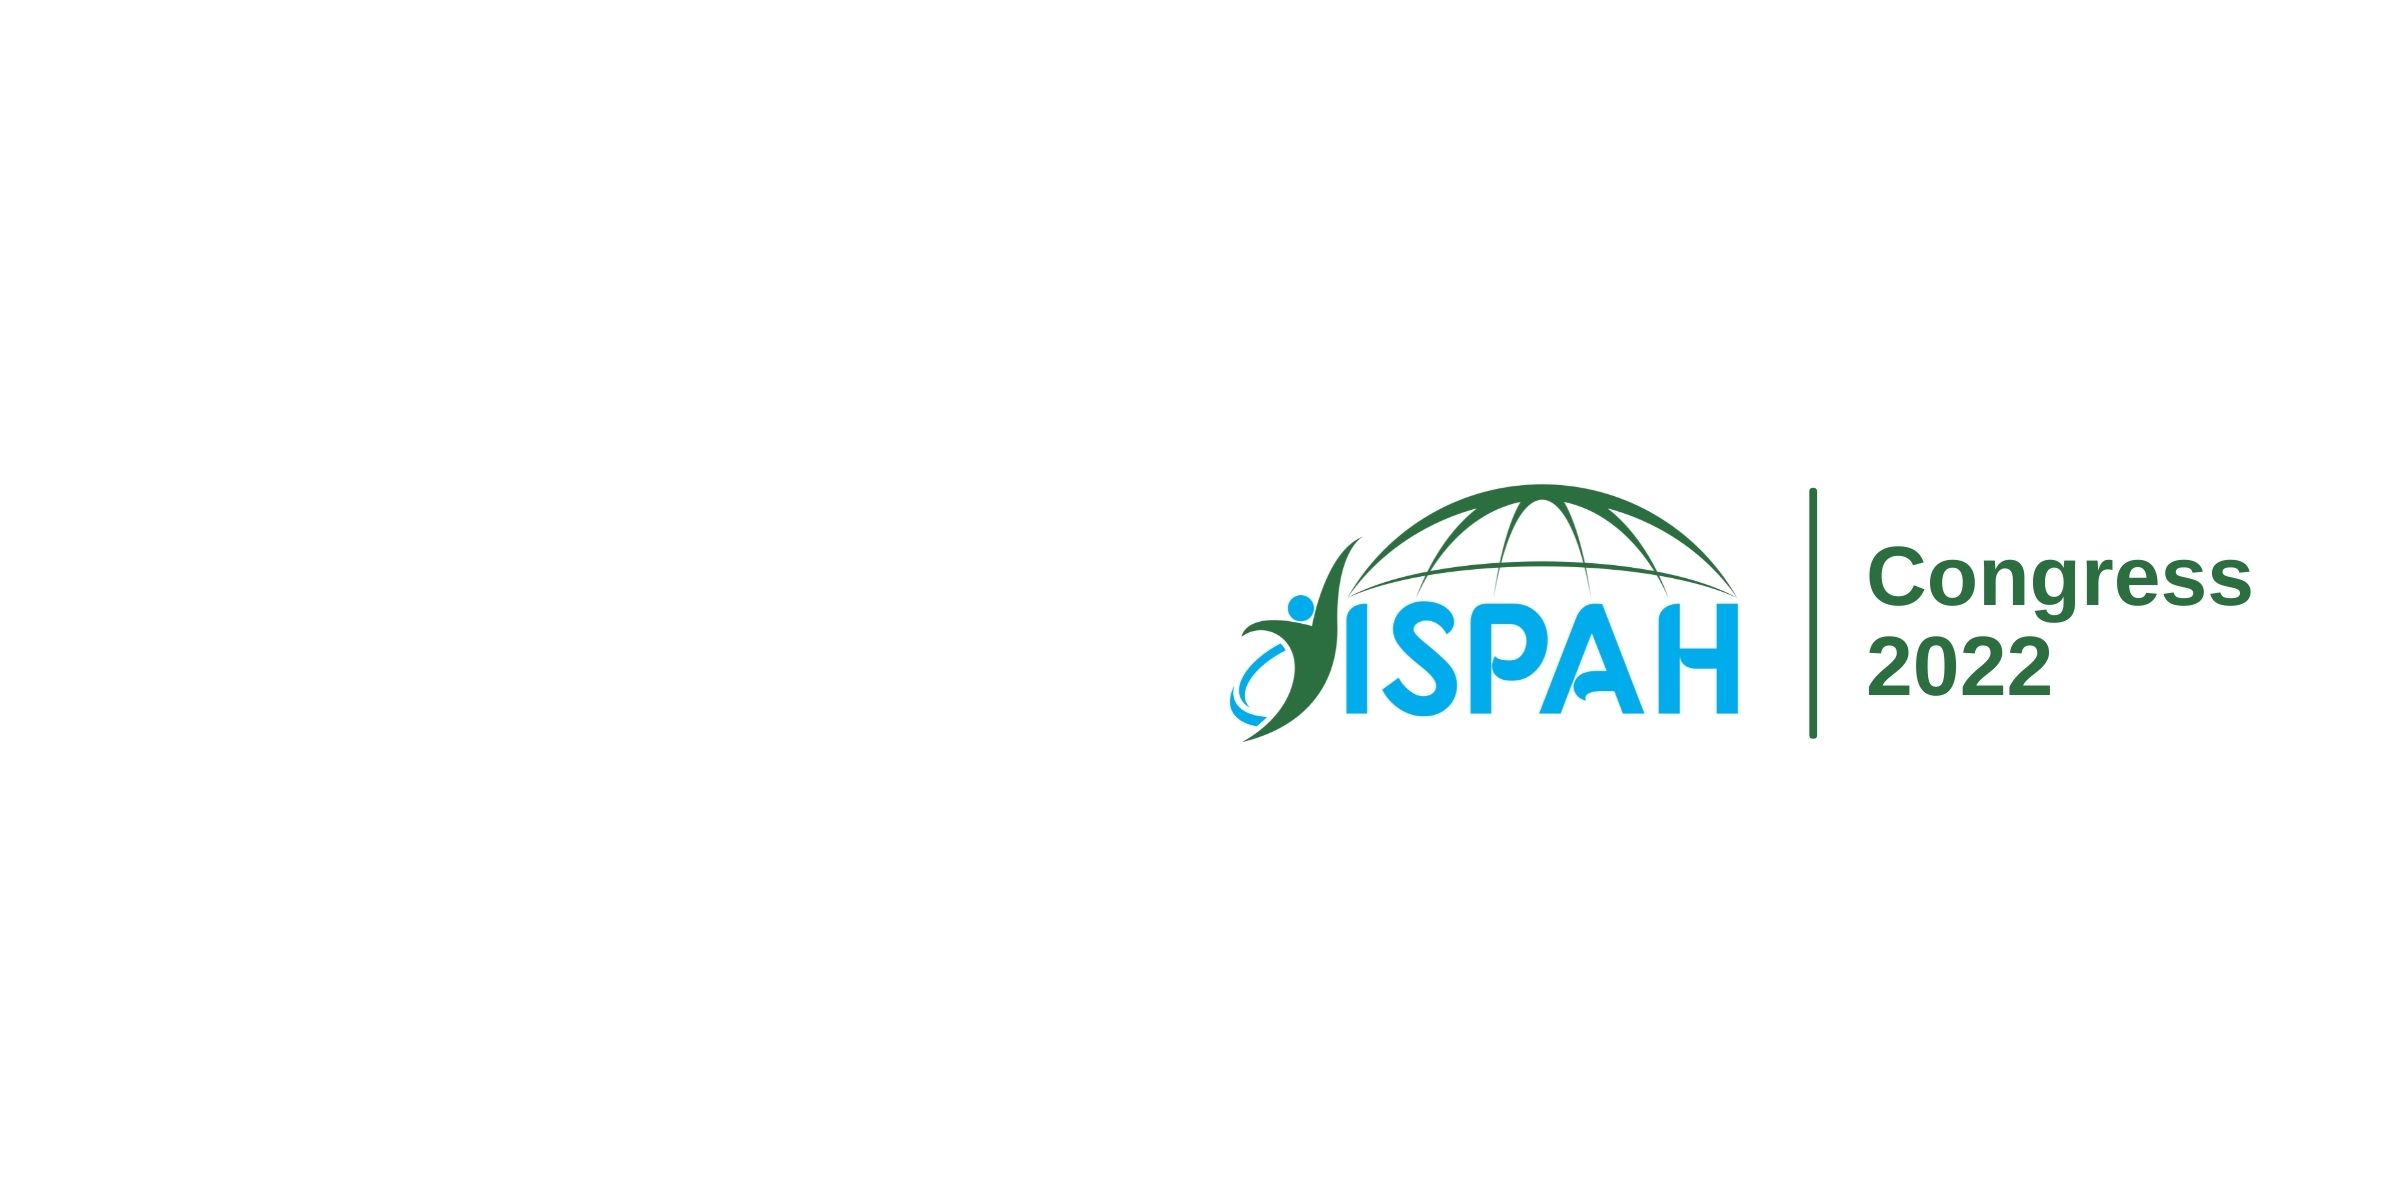 ISPAH Congress 2022 Website Launch